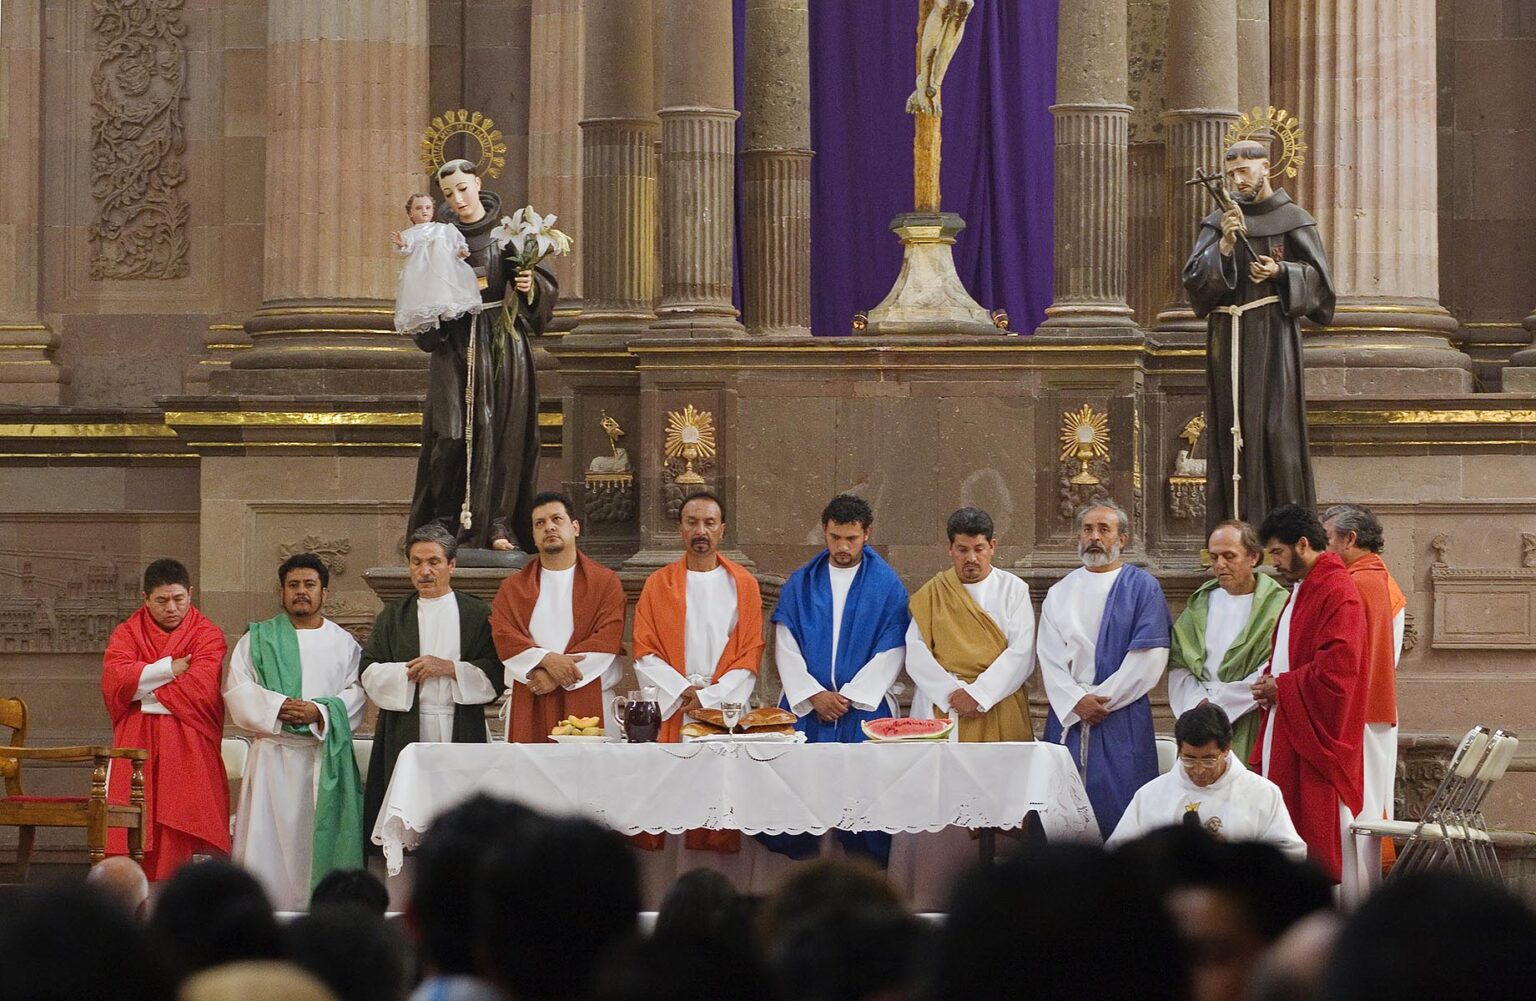 PRIEST and the 12 Apostles during Easter Service in TEMPLO DE SAN FRANCISCO - SAN MIGUEL DE ALLENDE, MEXICO